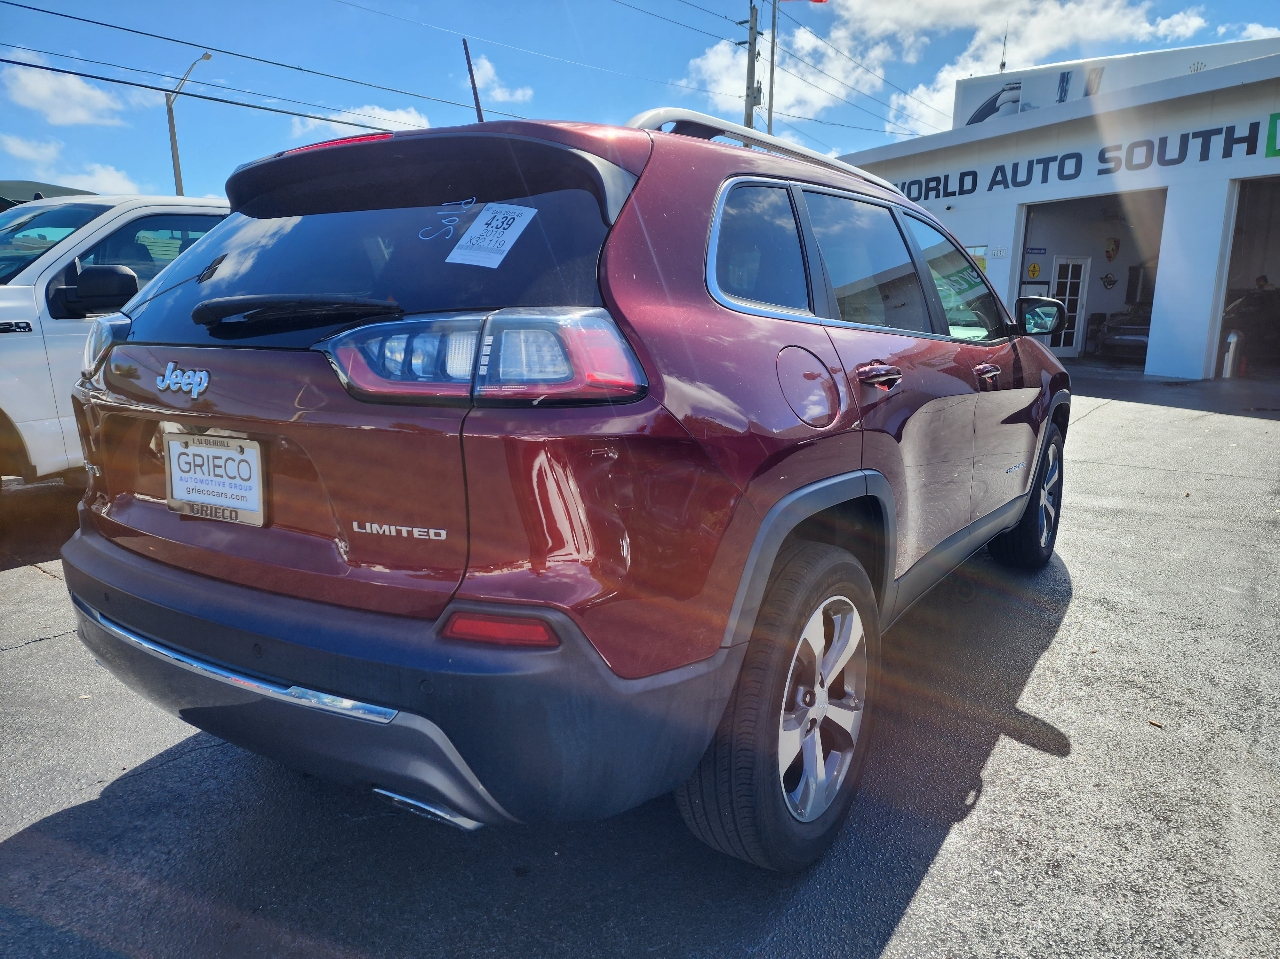 2019 JEEP Cherokee SUV / Crossover - $19,999